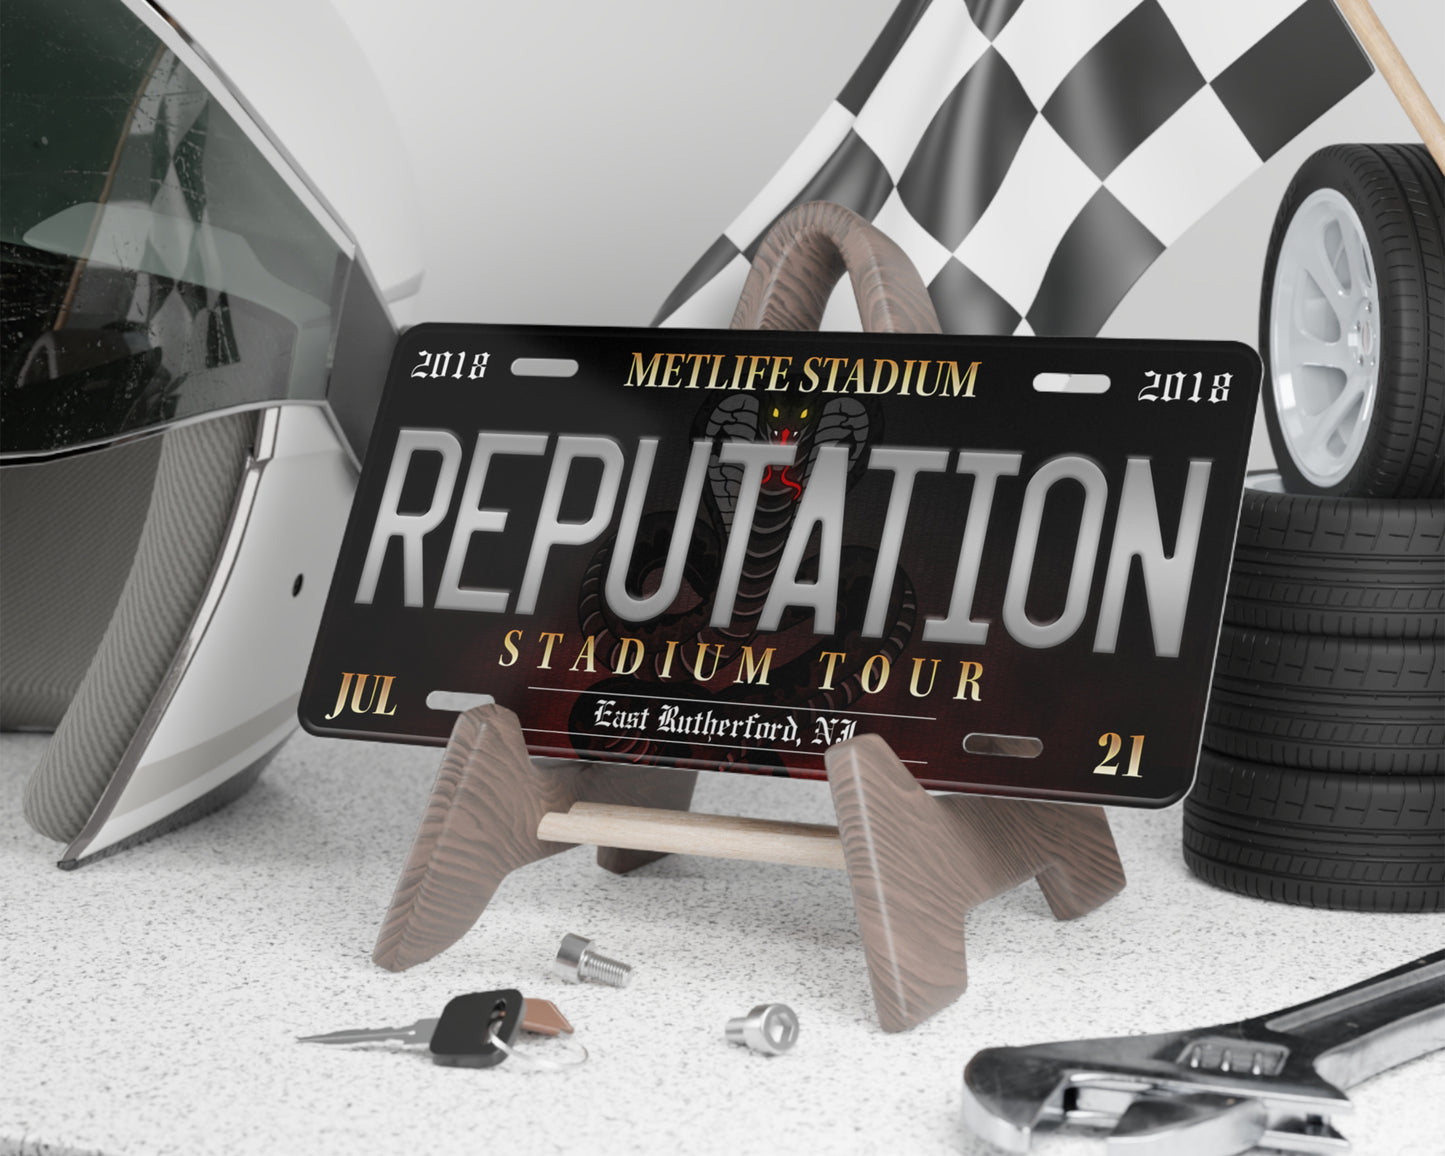 Reputation Stadium Tour license plate